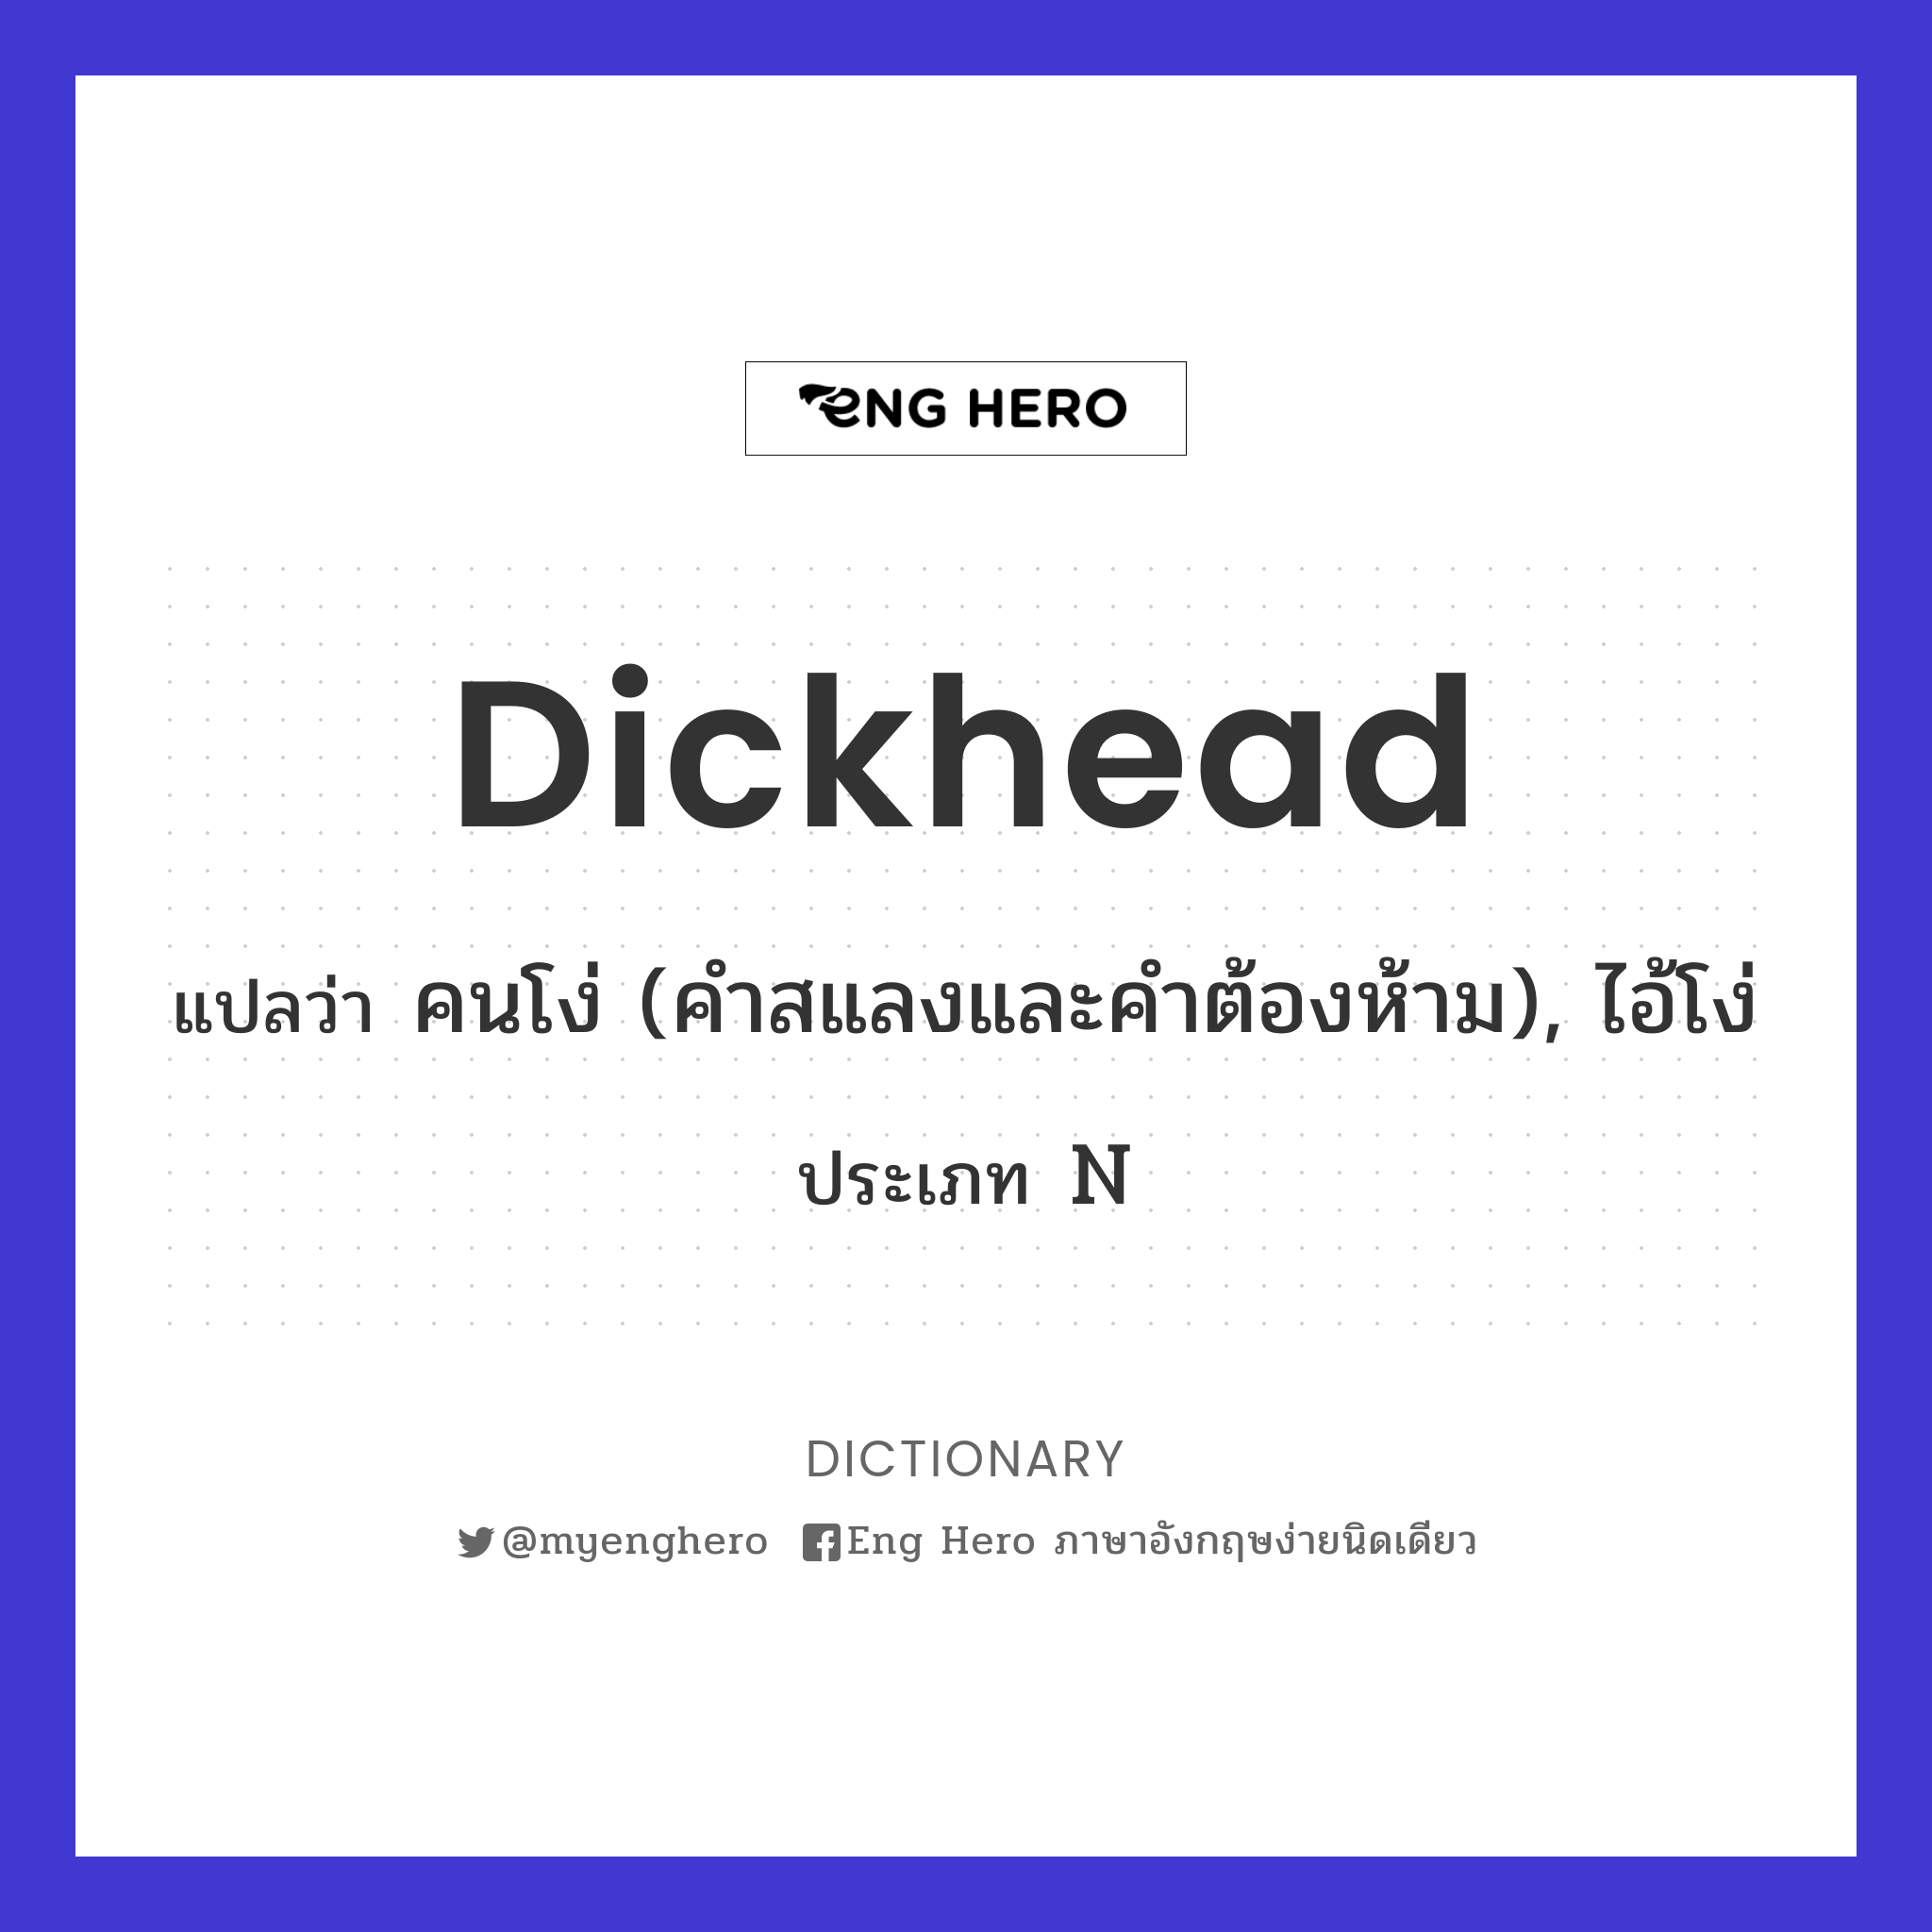 dickhead